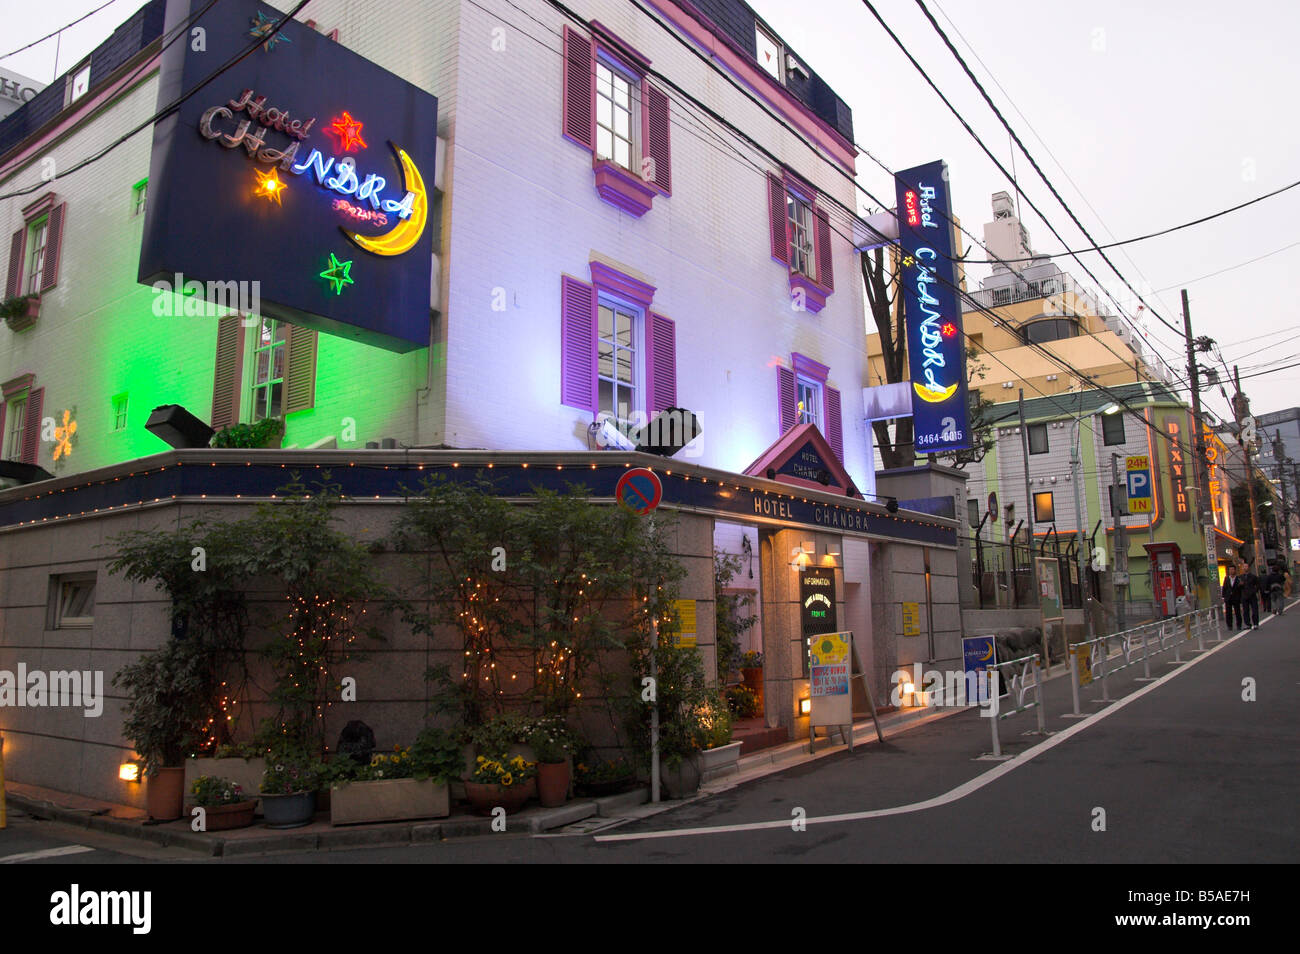 View at dusk of a street with row of love hotels, Dogenzaka, Shibuya, Tokyo, Honshu, Japan Stock Photo